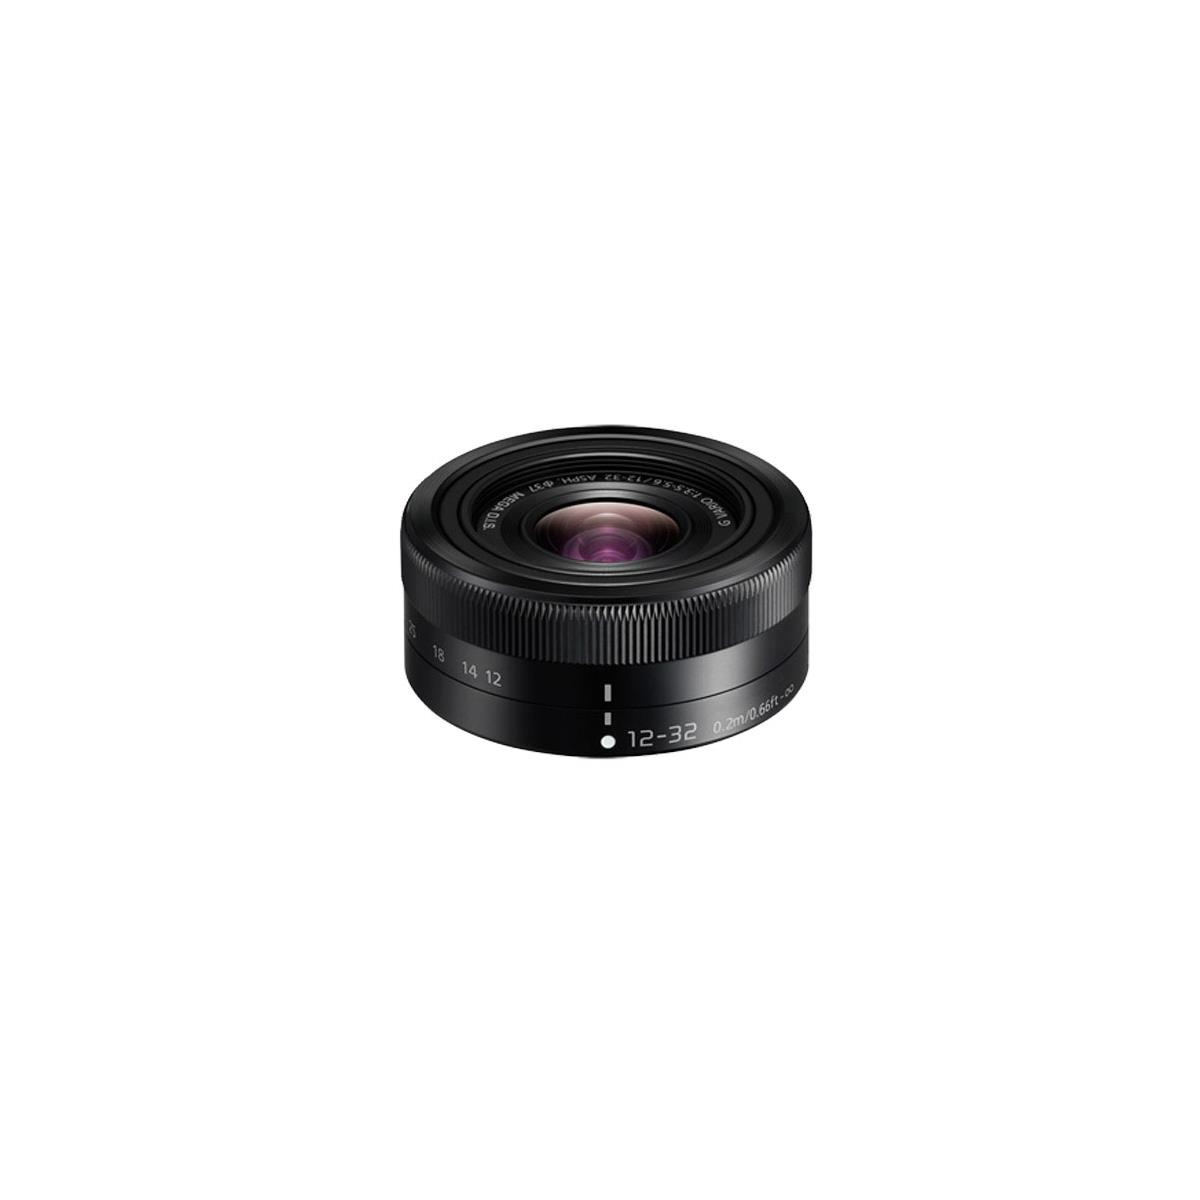 Image of Panasonic Lumix G Vario 12-32mm F/3.5-5.6 Aspherical OIS Lens